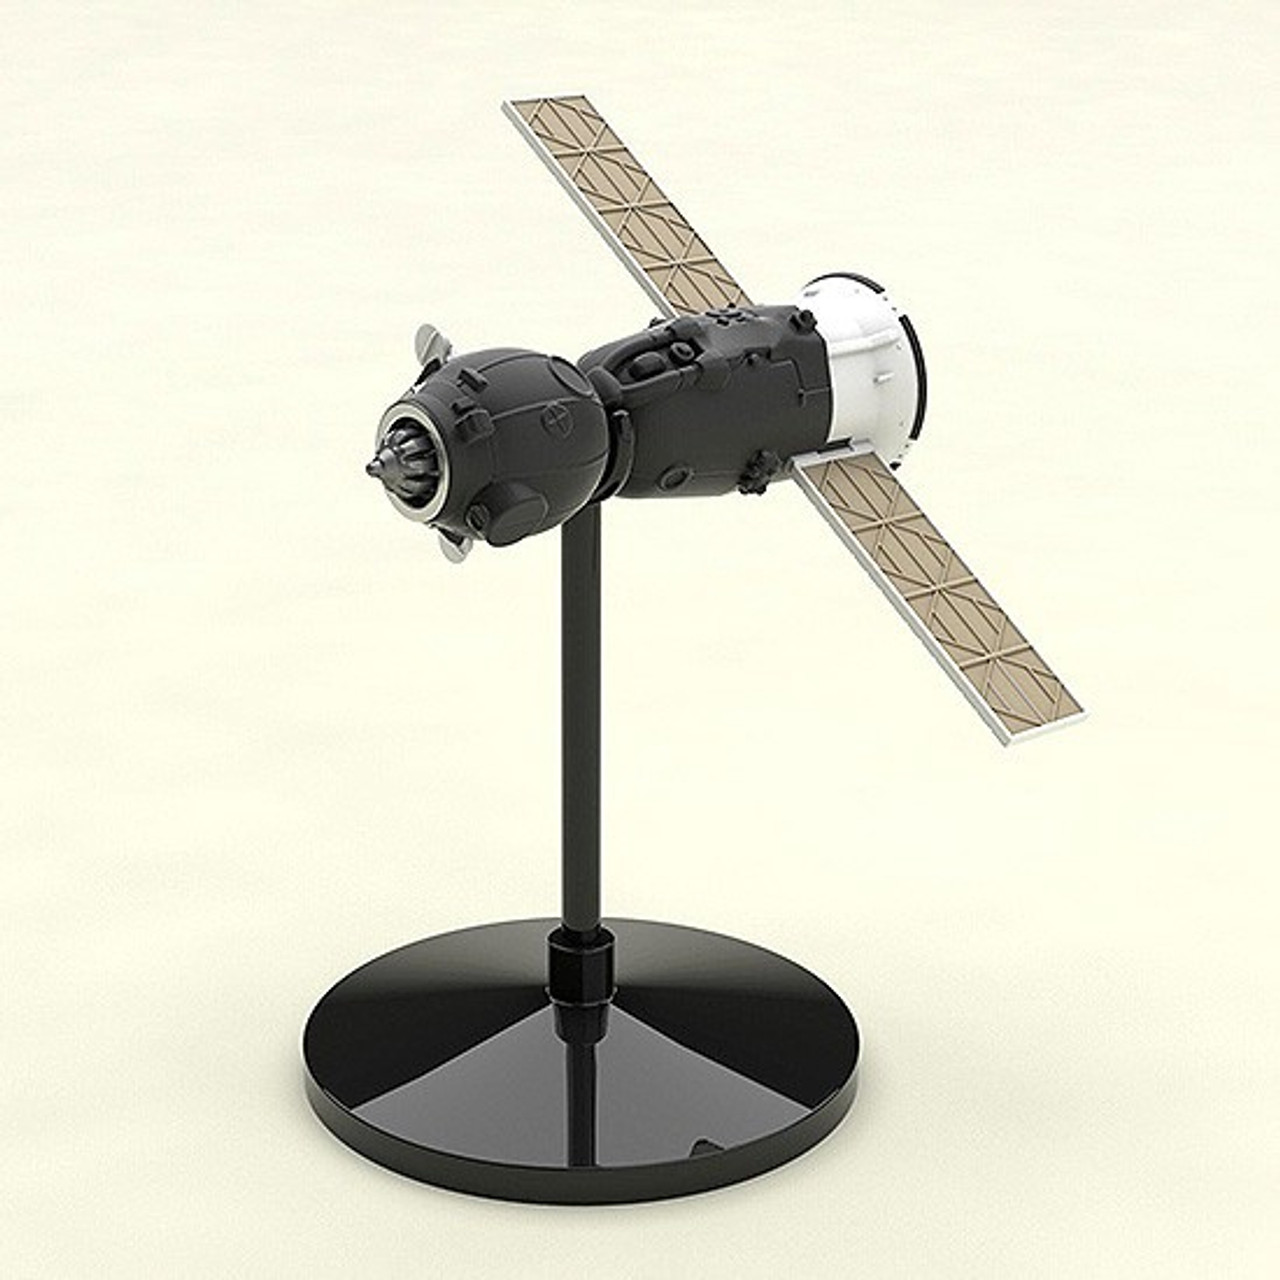 water bottle soyuz spacecraft model